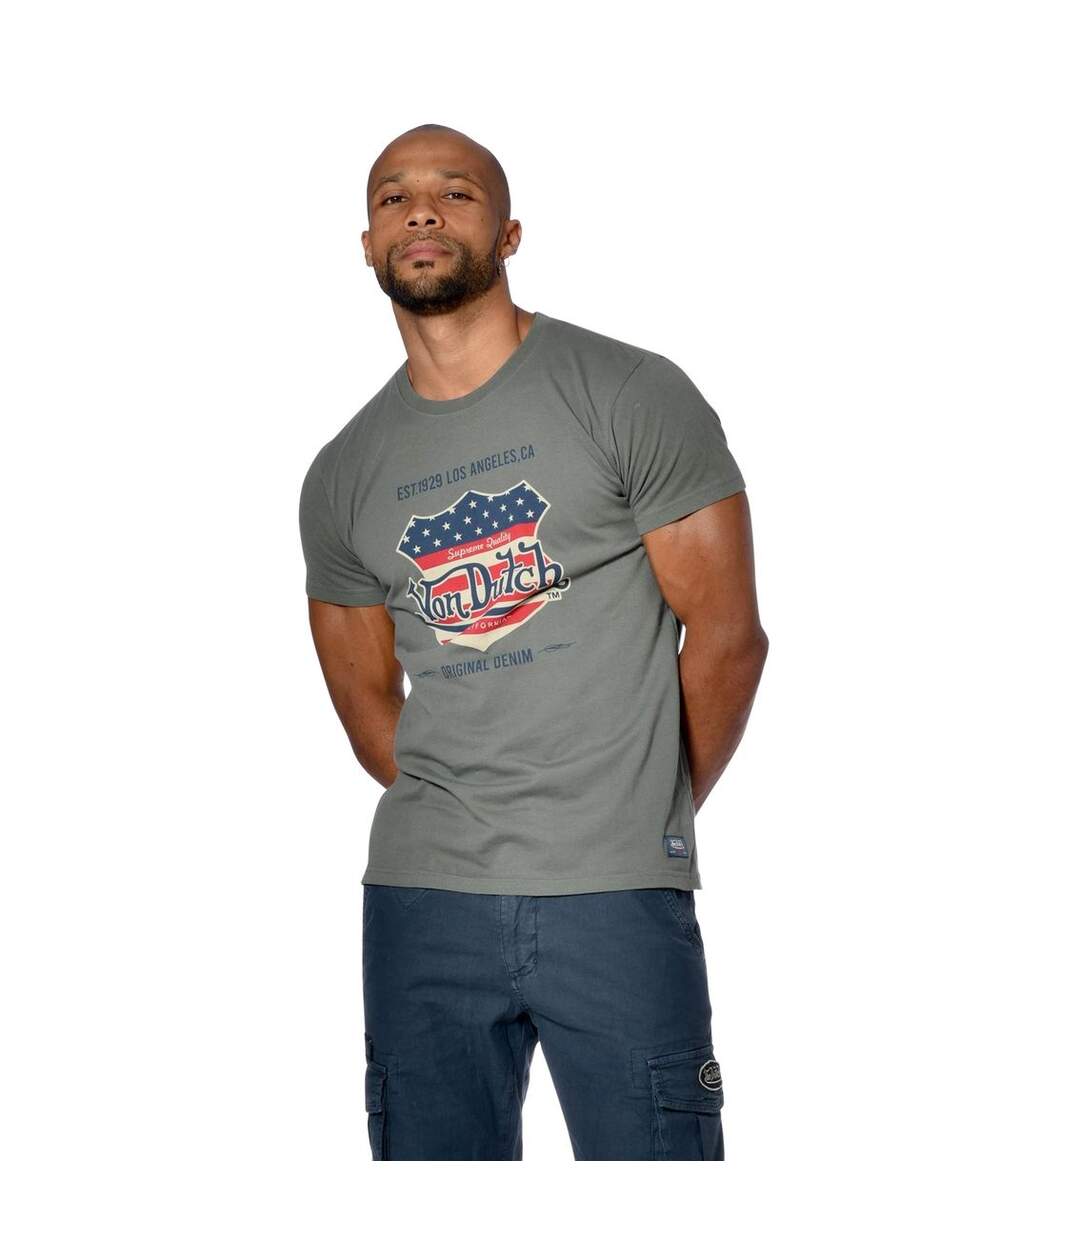 Tee Shirt Homme Blason USA, T Shirt Homme, 100% Coton, Anti-irritation et Durable